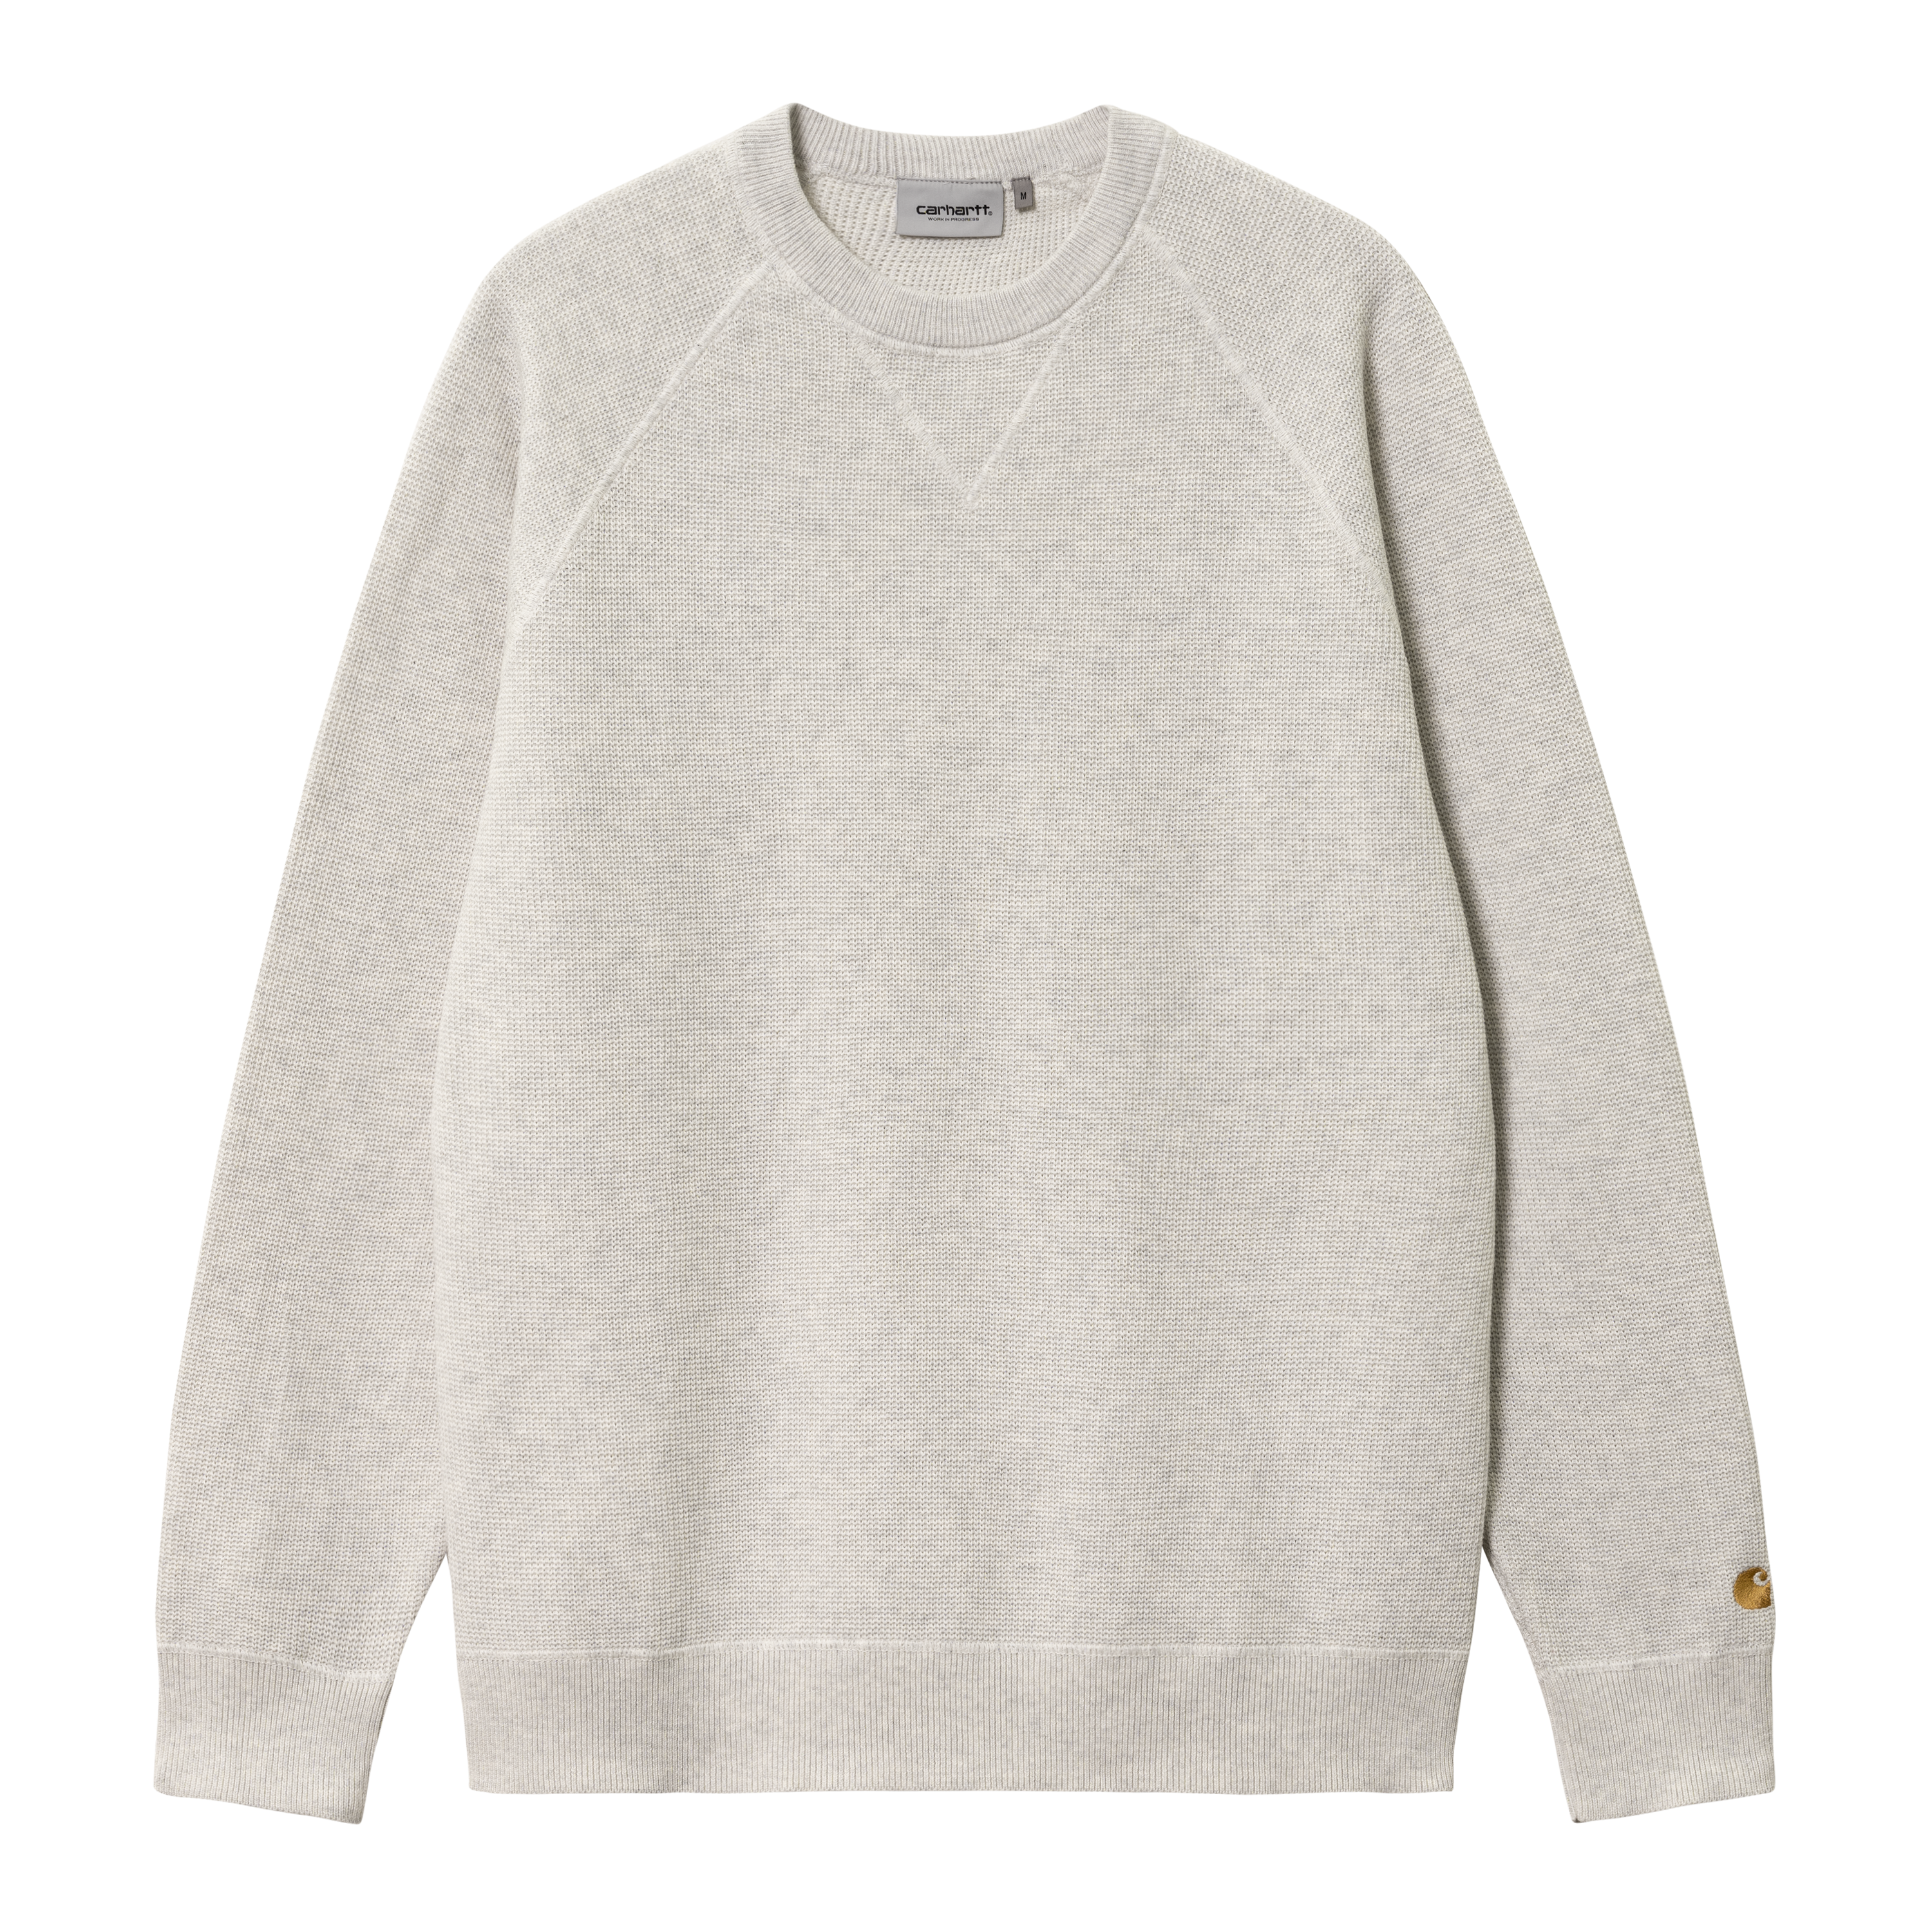 Carhartt WIP Chase Sweater in Grau